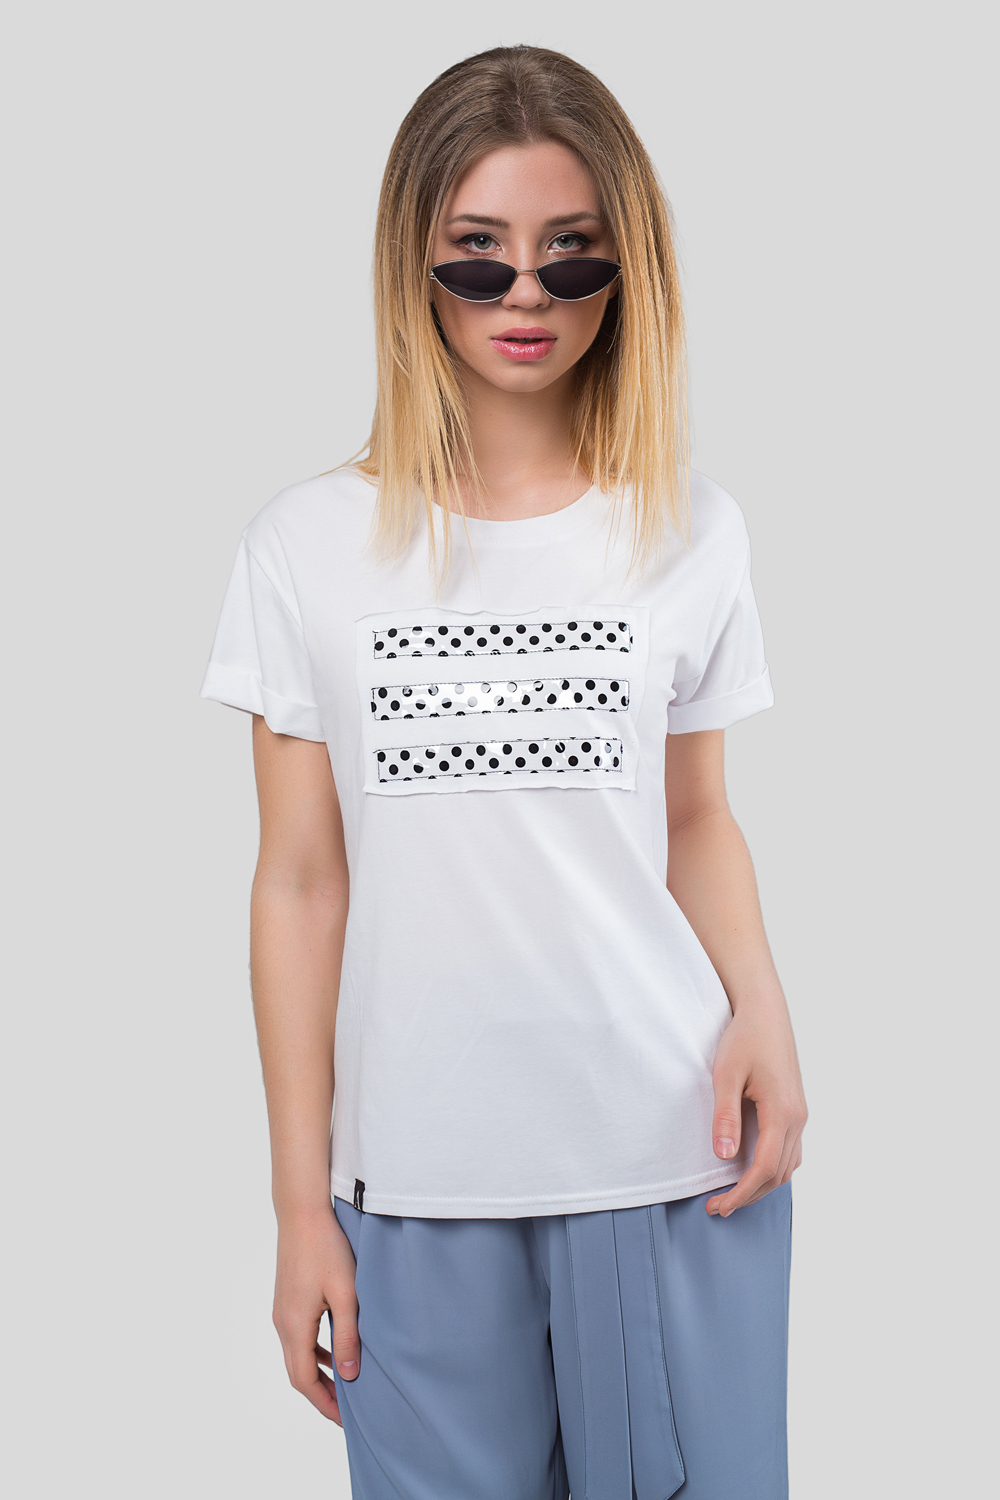 White T-shirt with polka dot insert